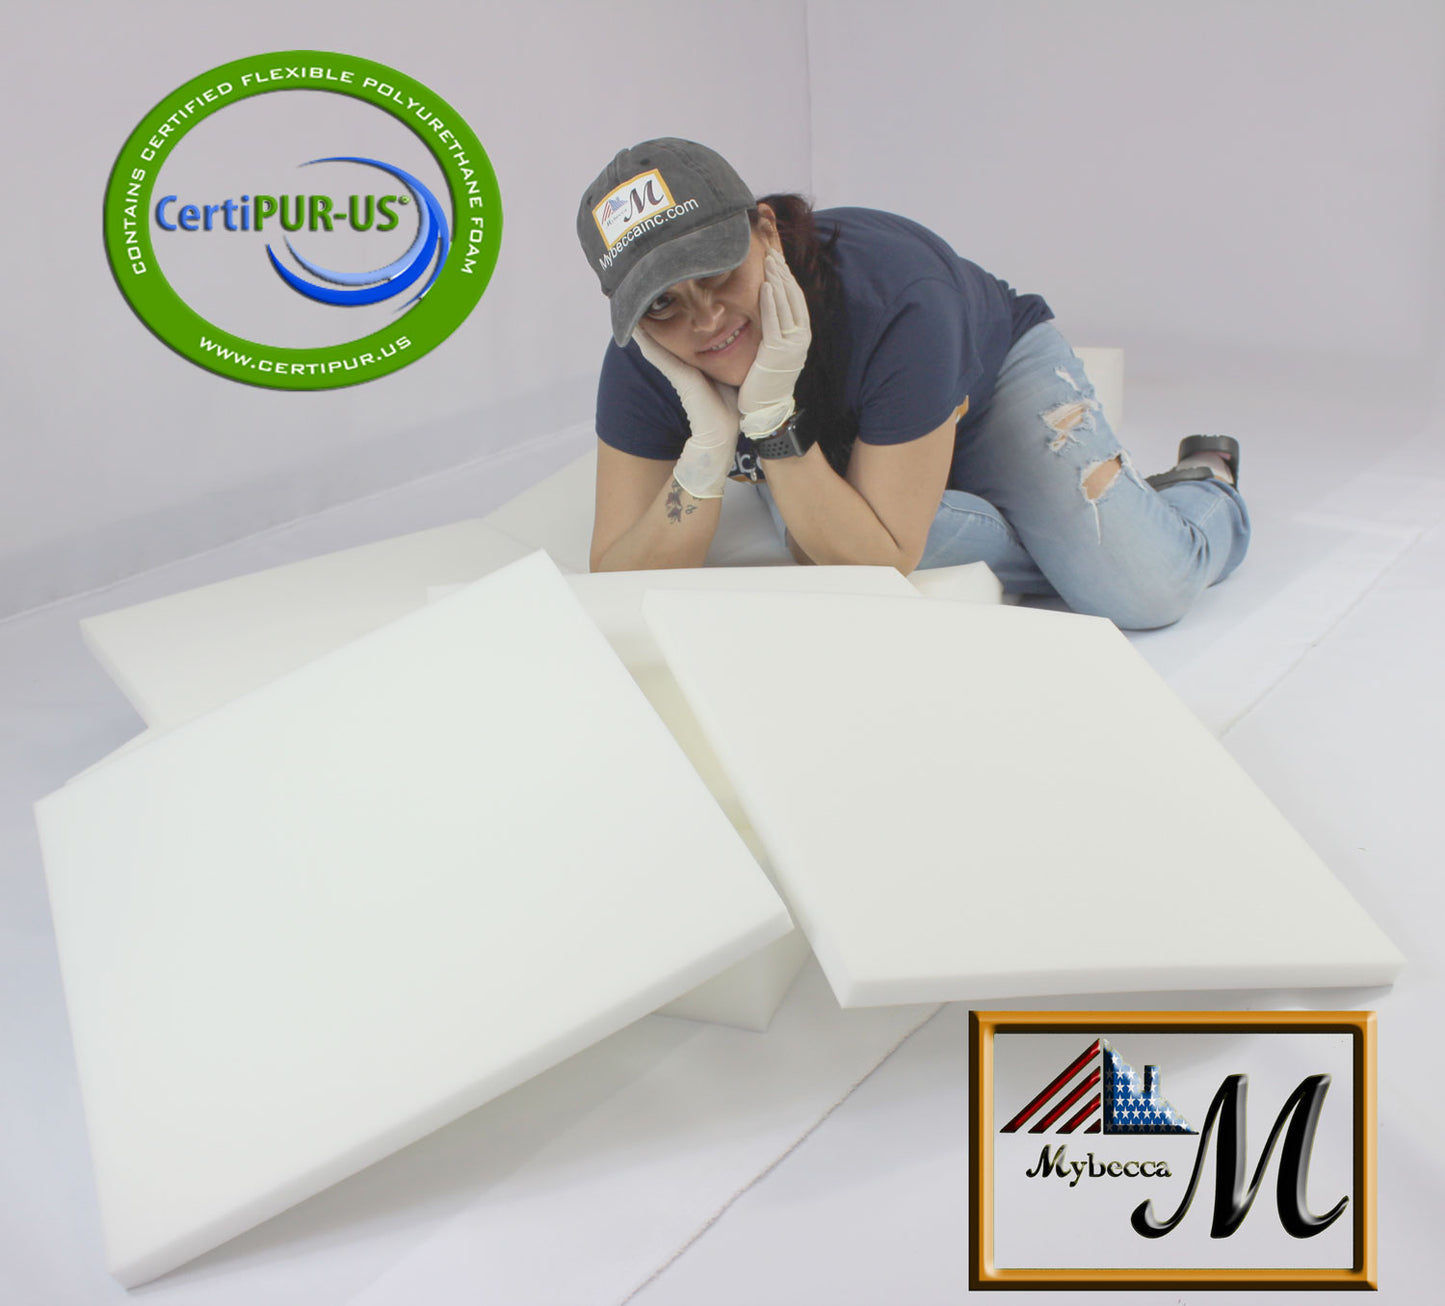 1" x 30" x 72" Upholstery Foam Cushion (Seat Replacement, Upholstery Sheet, Foam Padding)